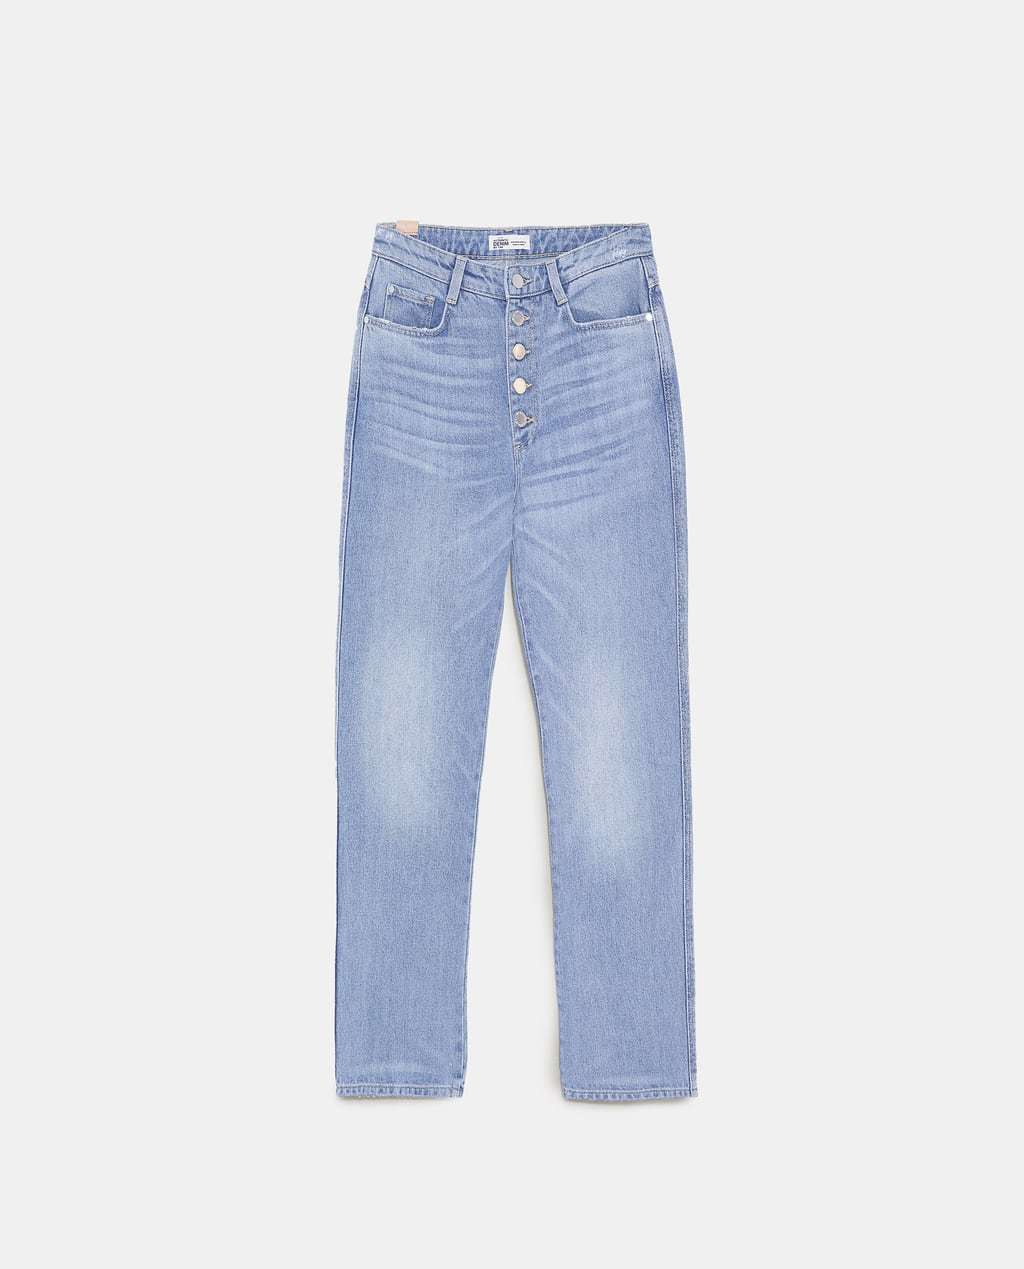 Jeans denim boot cut de Zara por 29,95 euros.